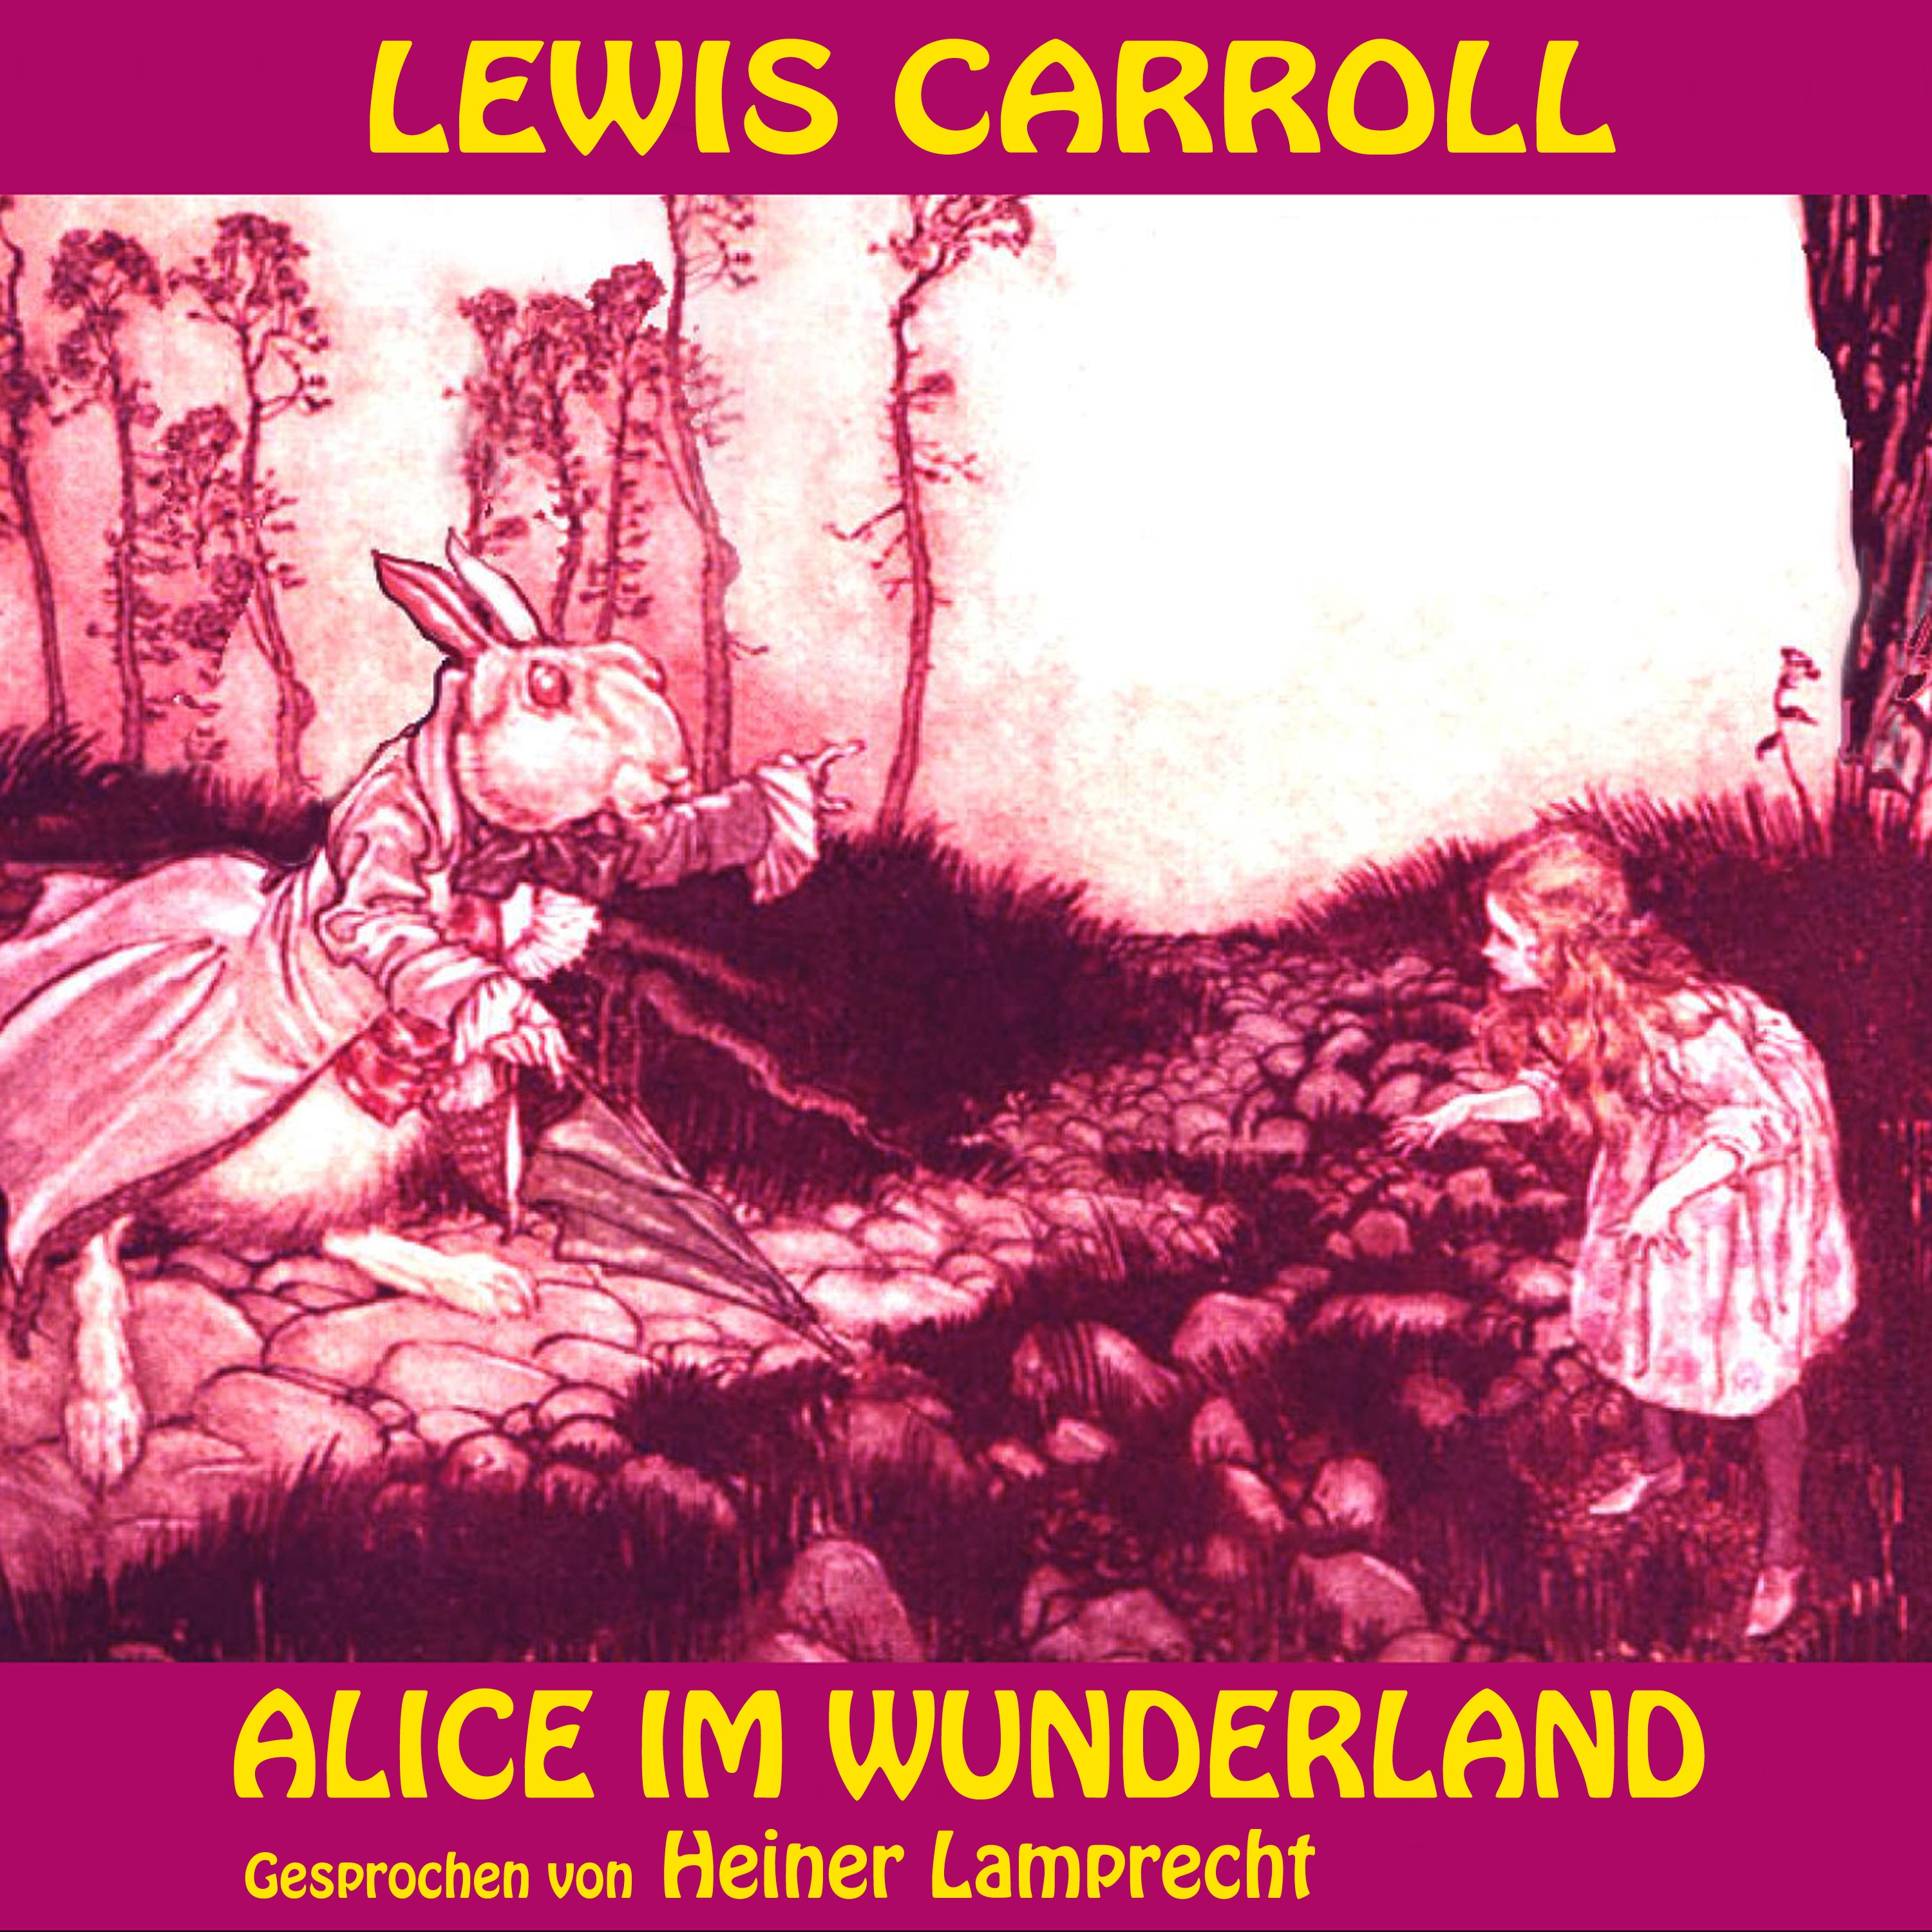 Kapitel 11: Alice im Wunderland (Teil 4)